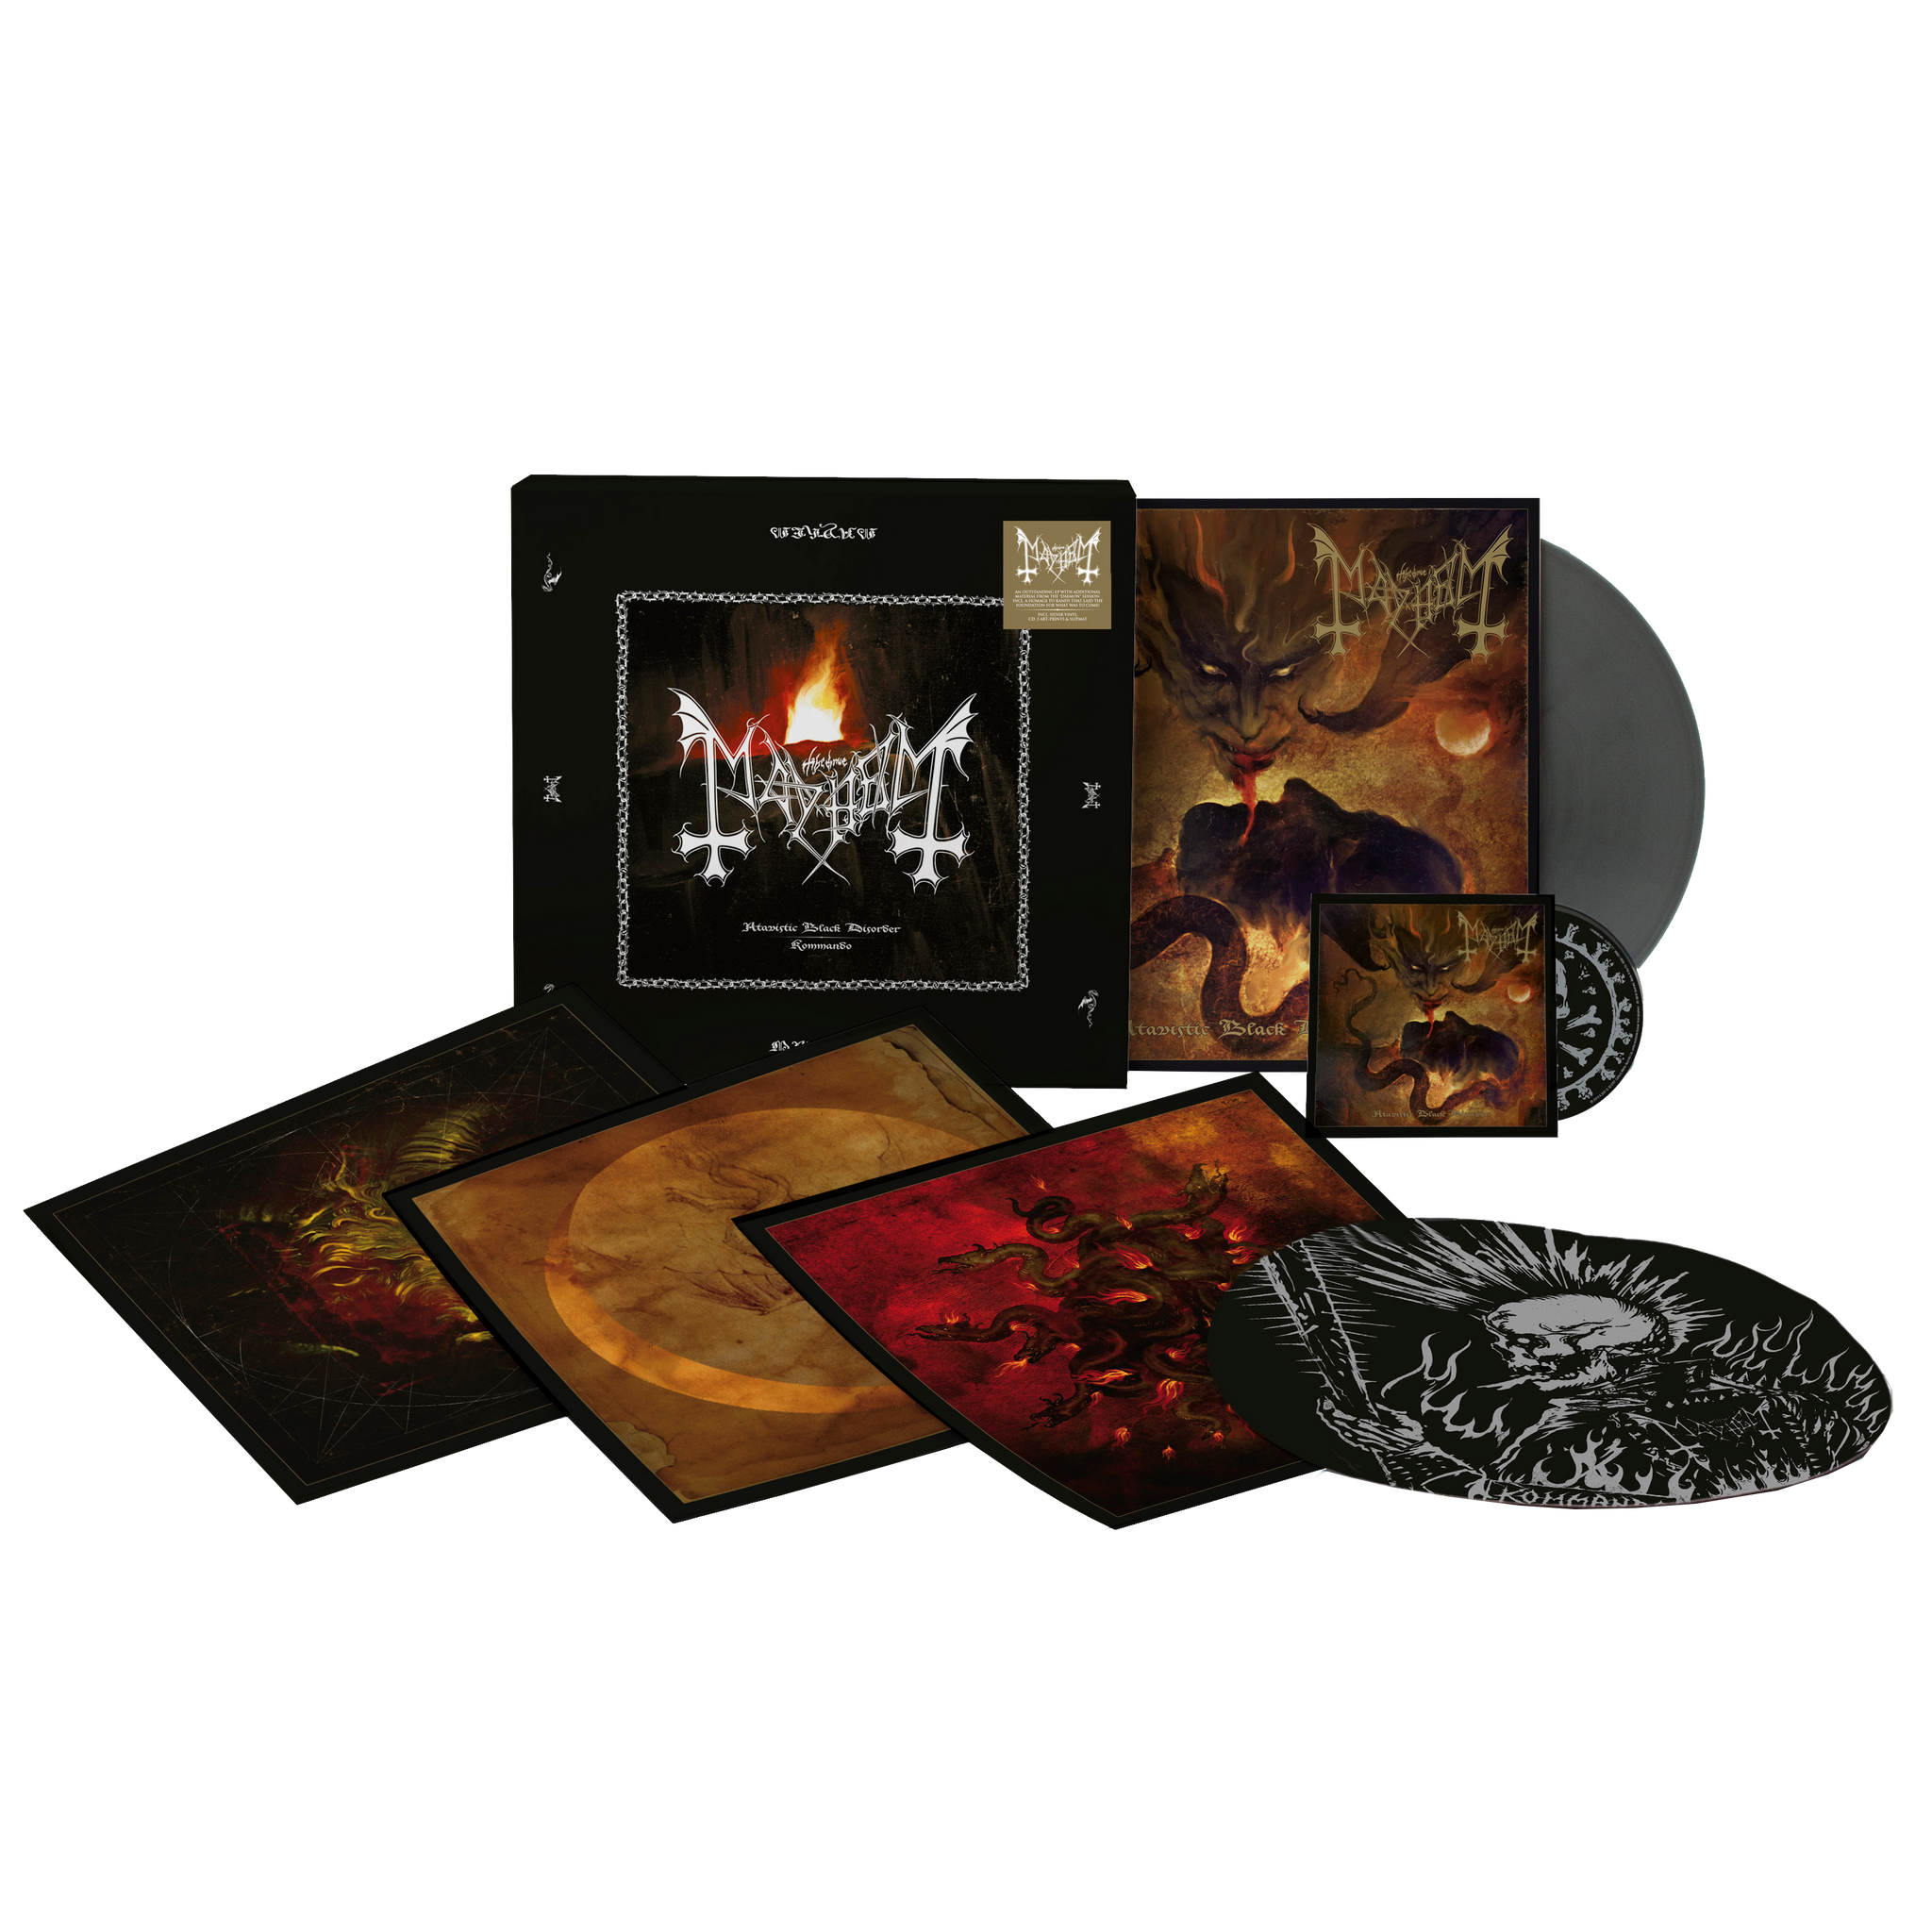 MAYHEM - Atavistic Black Disorder / Kommando - EP - Ltd. Deluxe Silver LP + CD Box Set